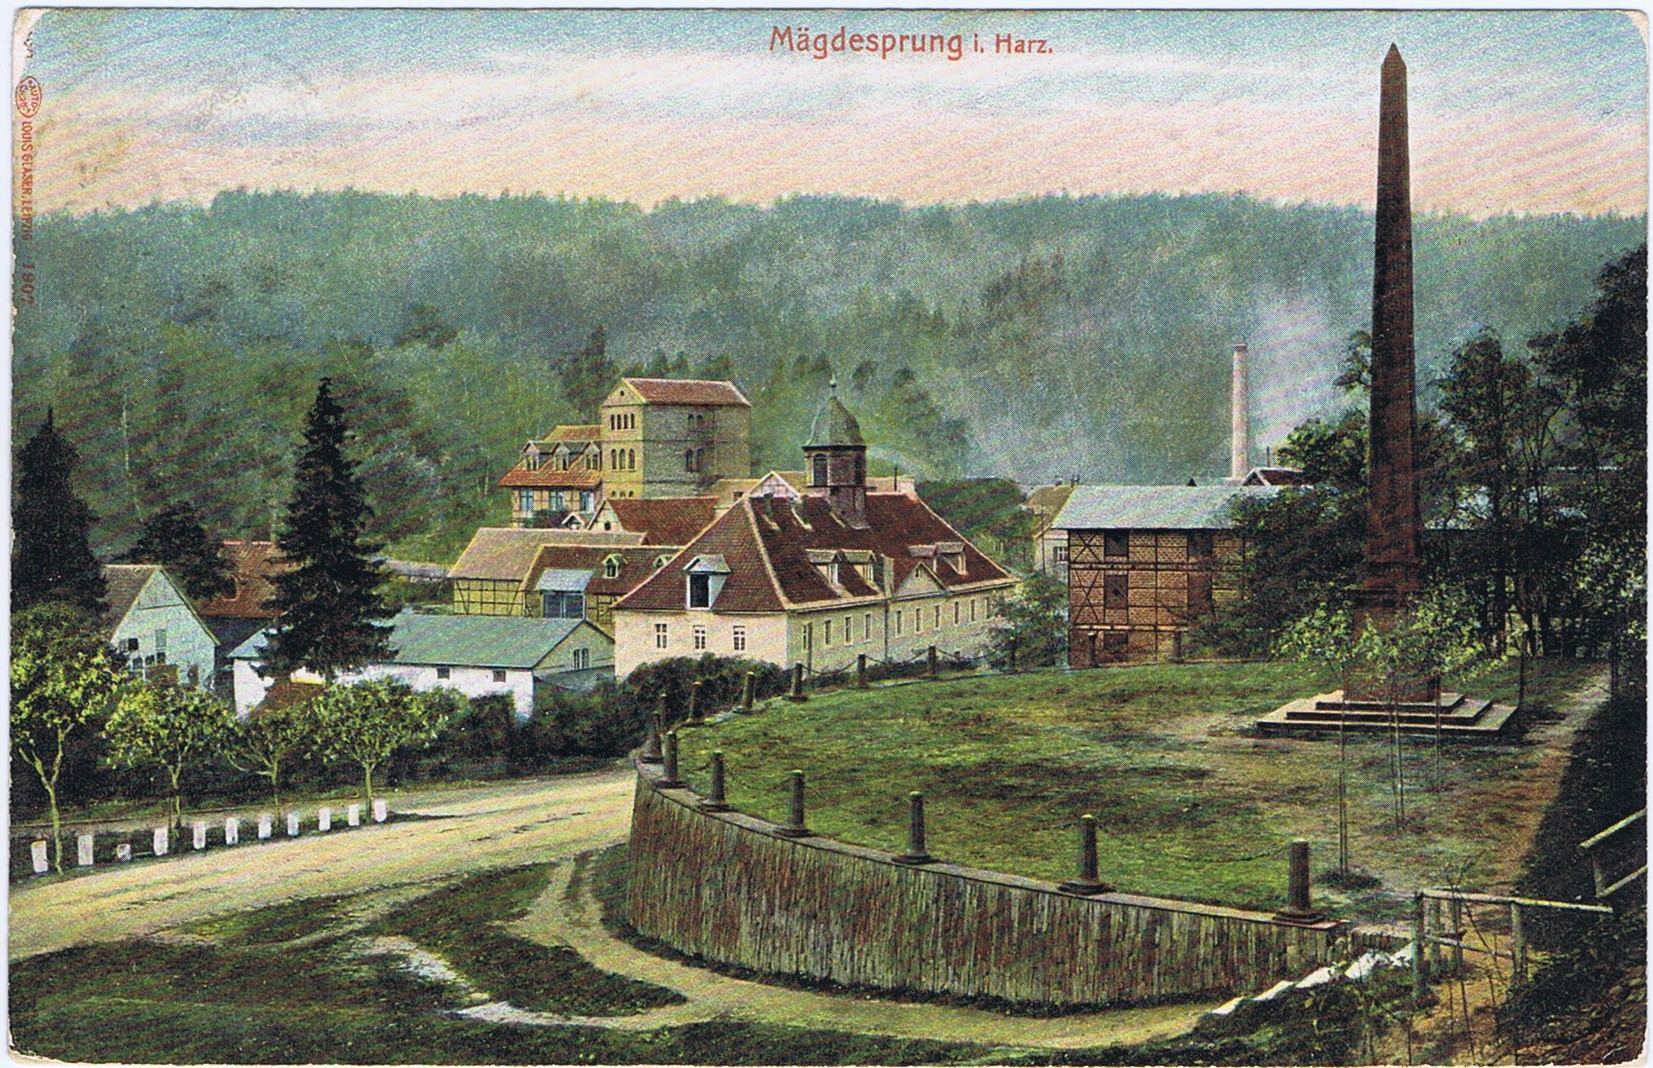 Ansichtskarte: Mägdesprung i. Harz. (Kulturstiftung Sachsen-Anhalt CC BY-NC-SA)